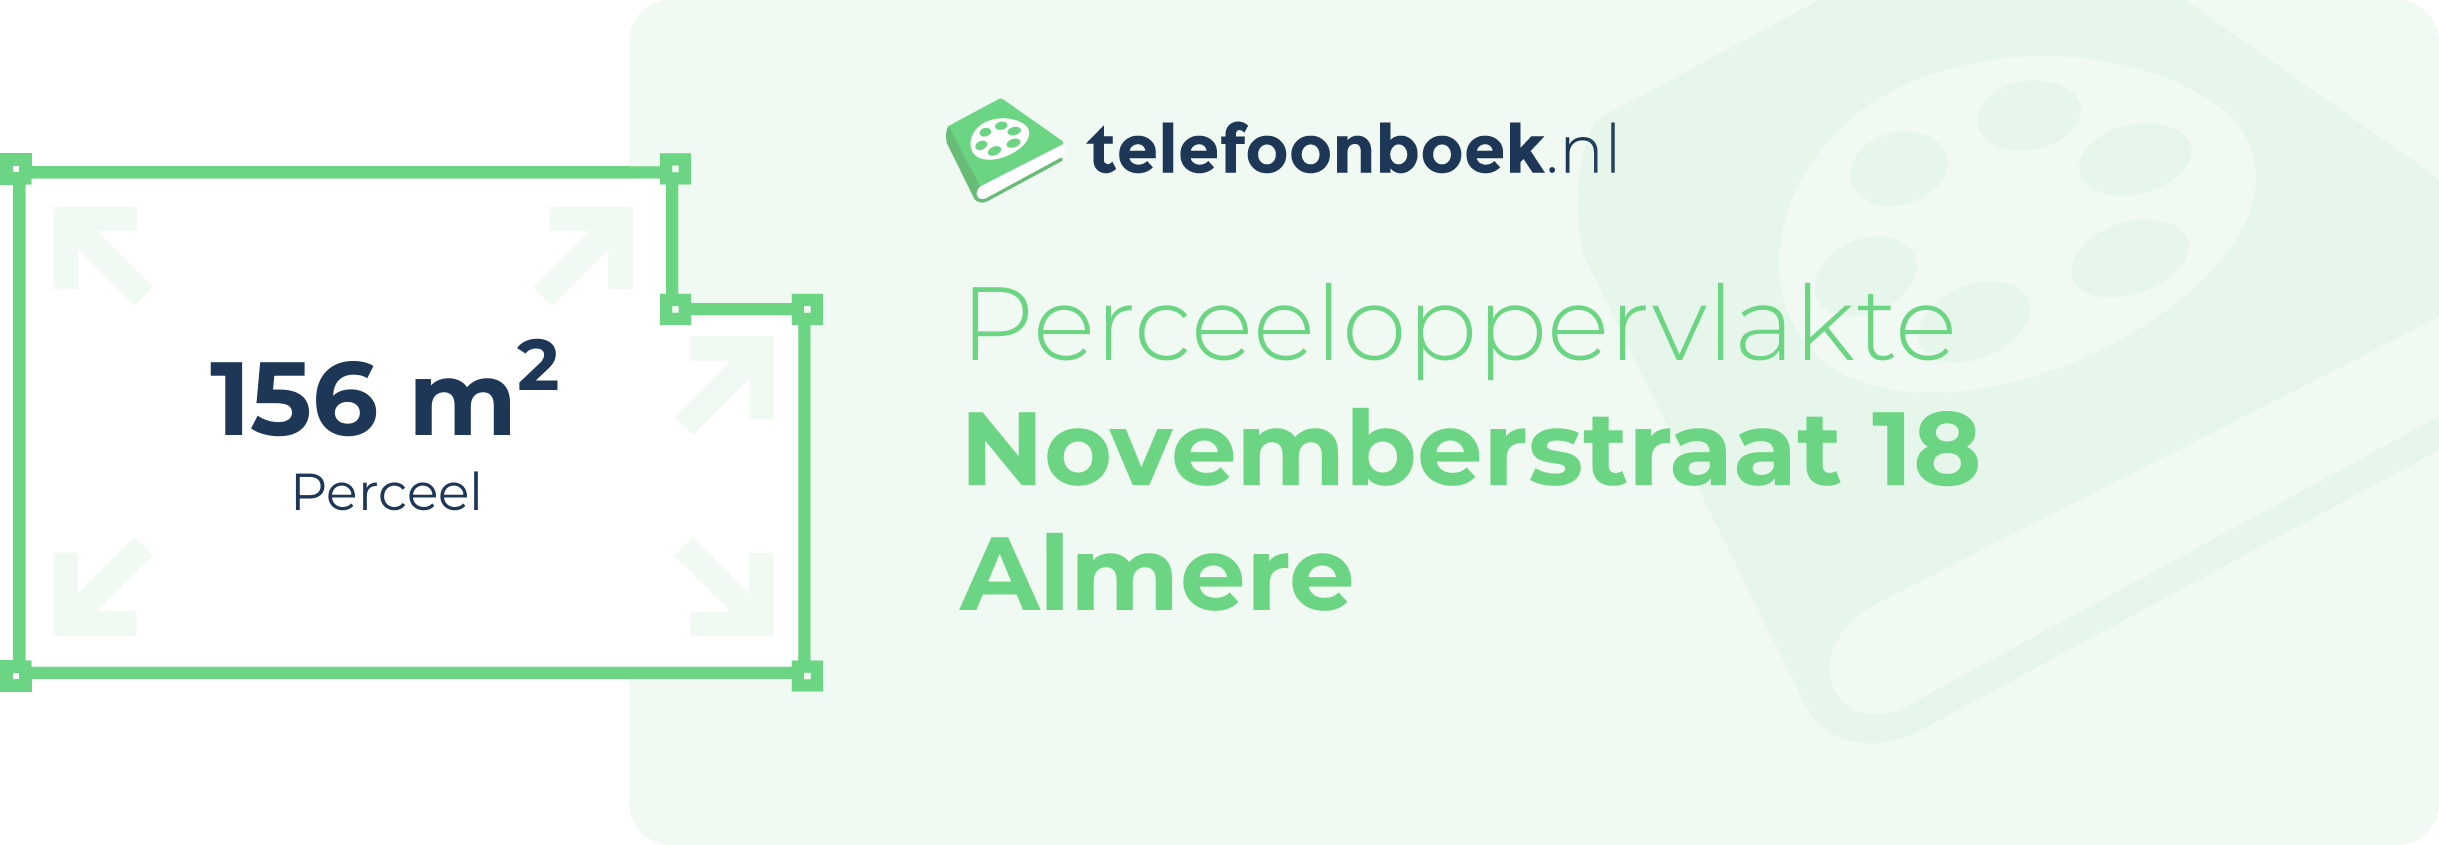 Perceeloppervlakte Novemberstraat 18 Almere